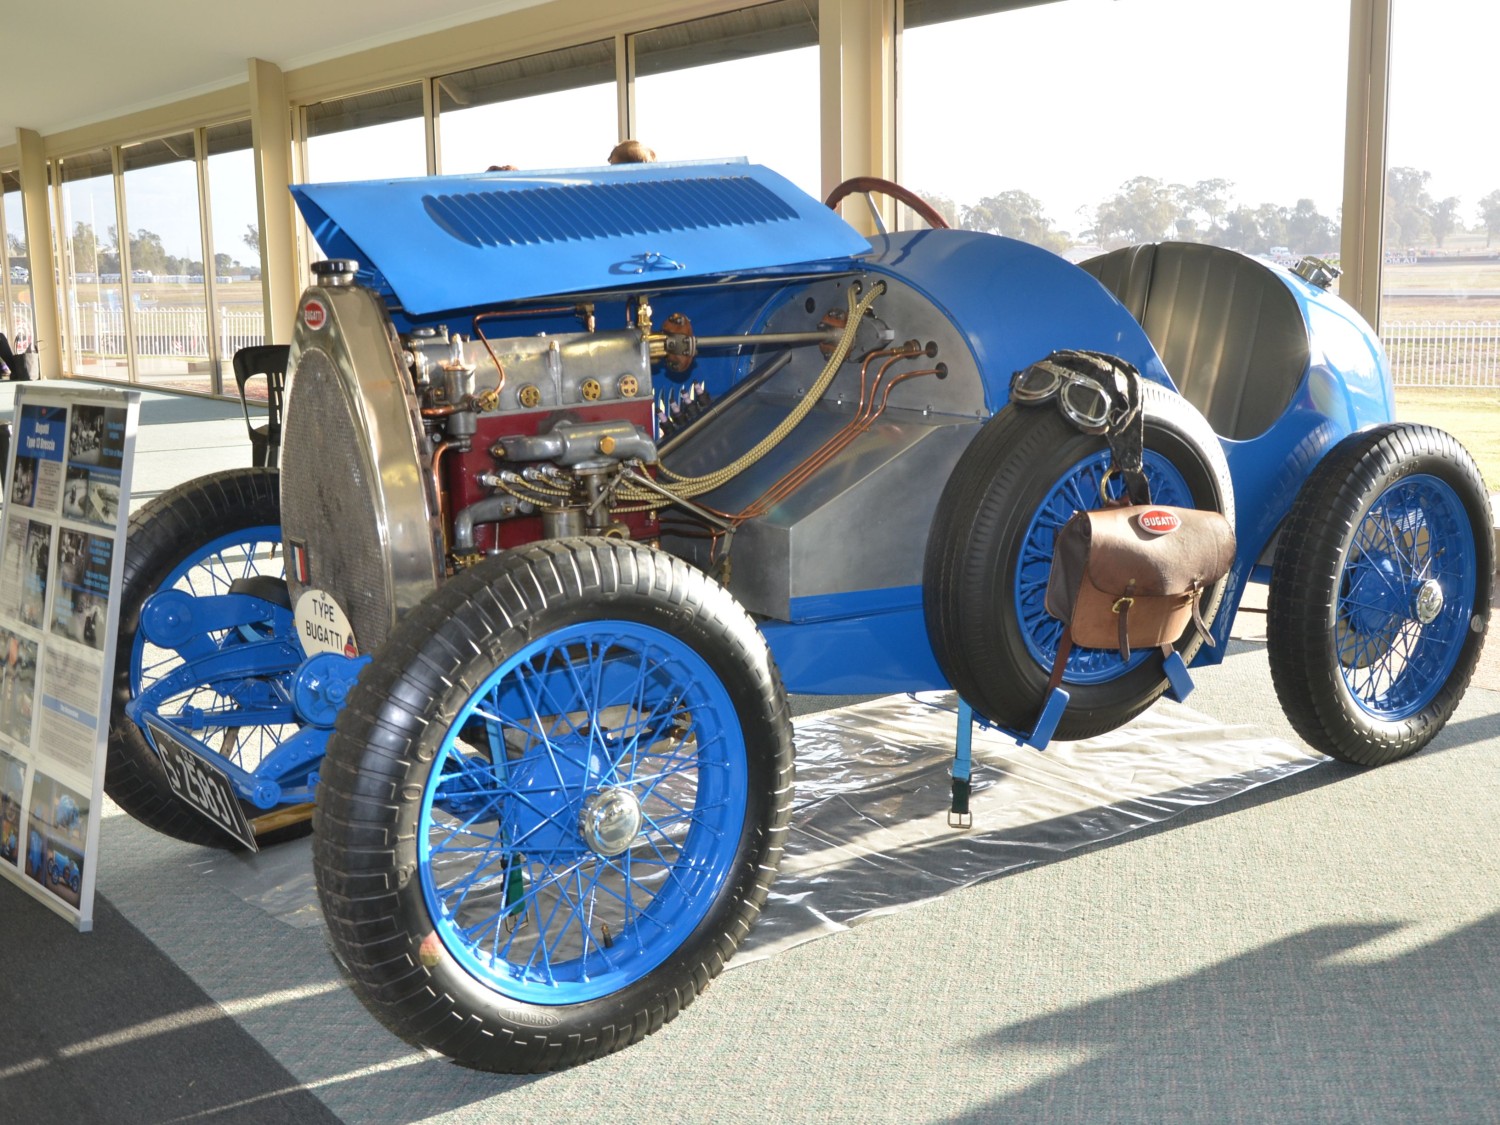 1922 Bugatti type 13